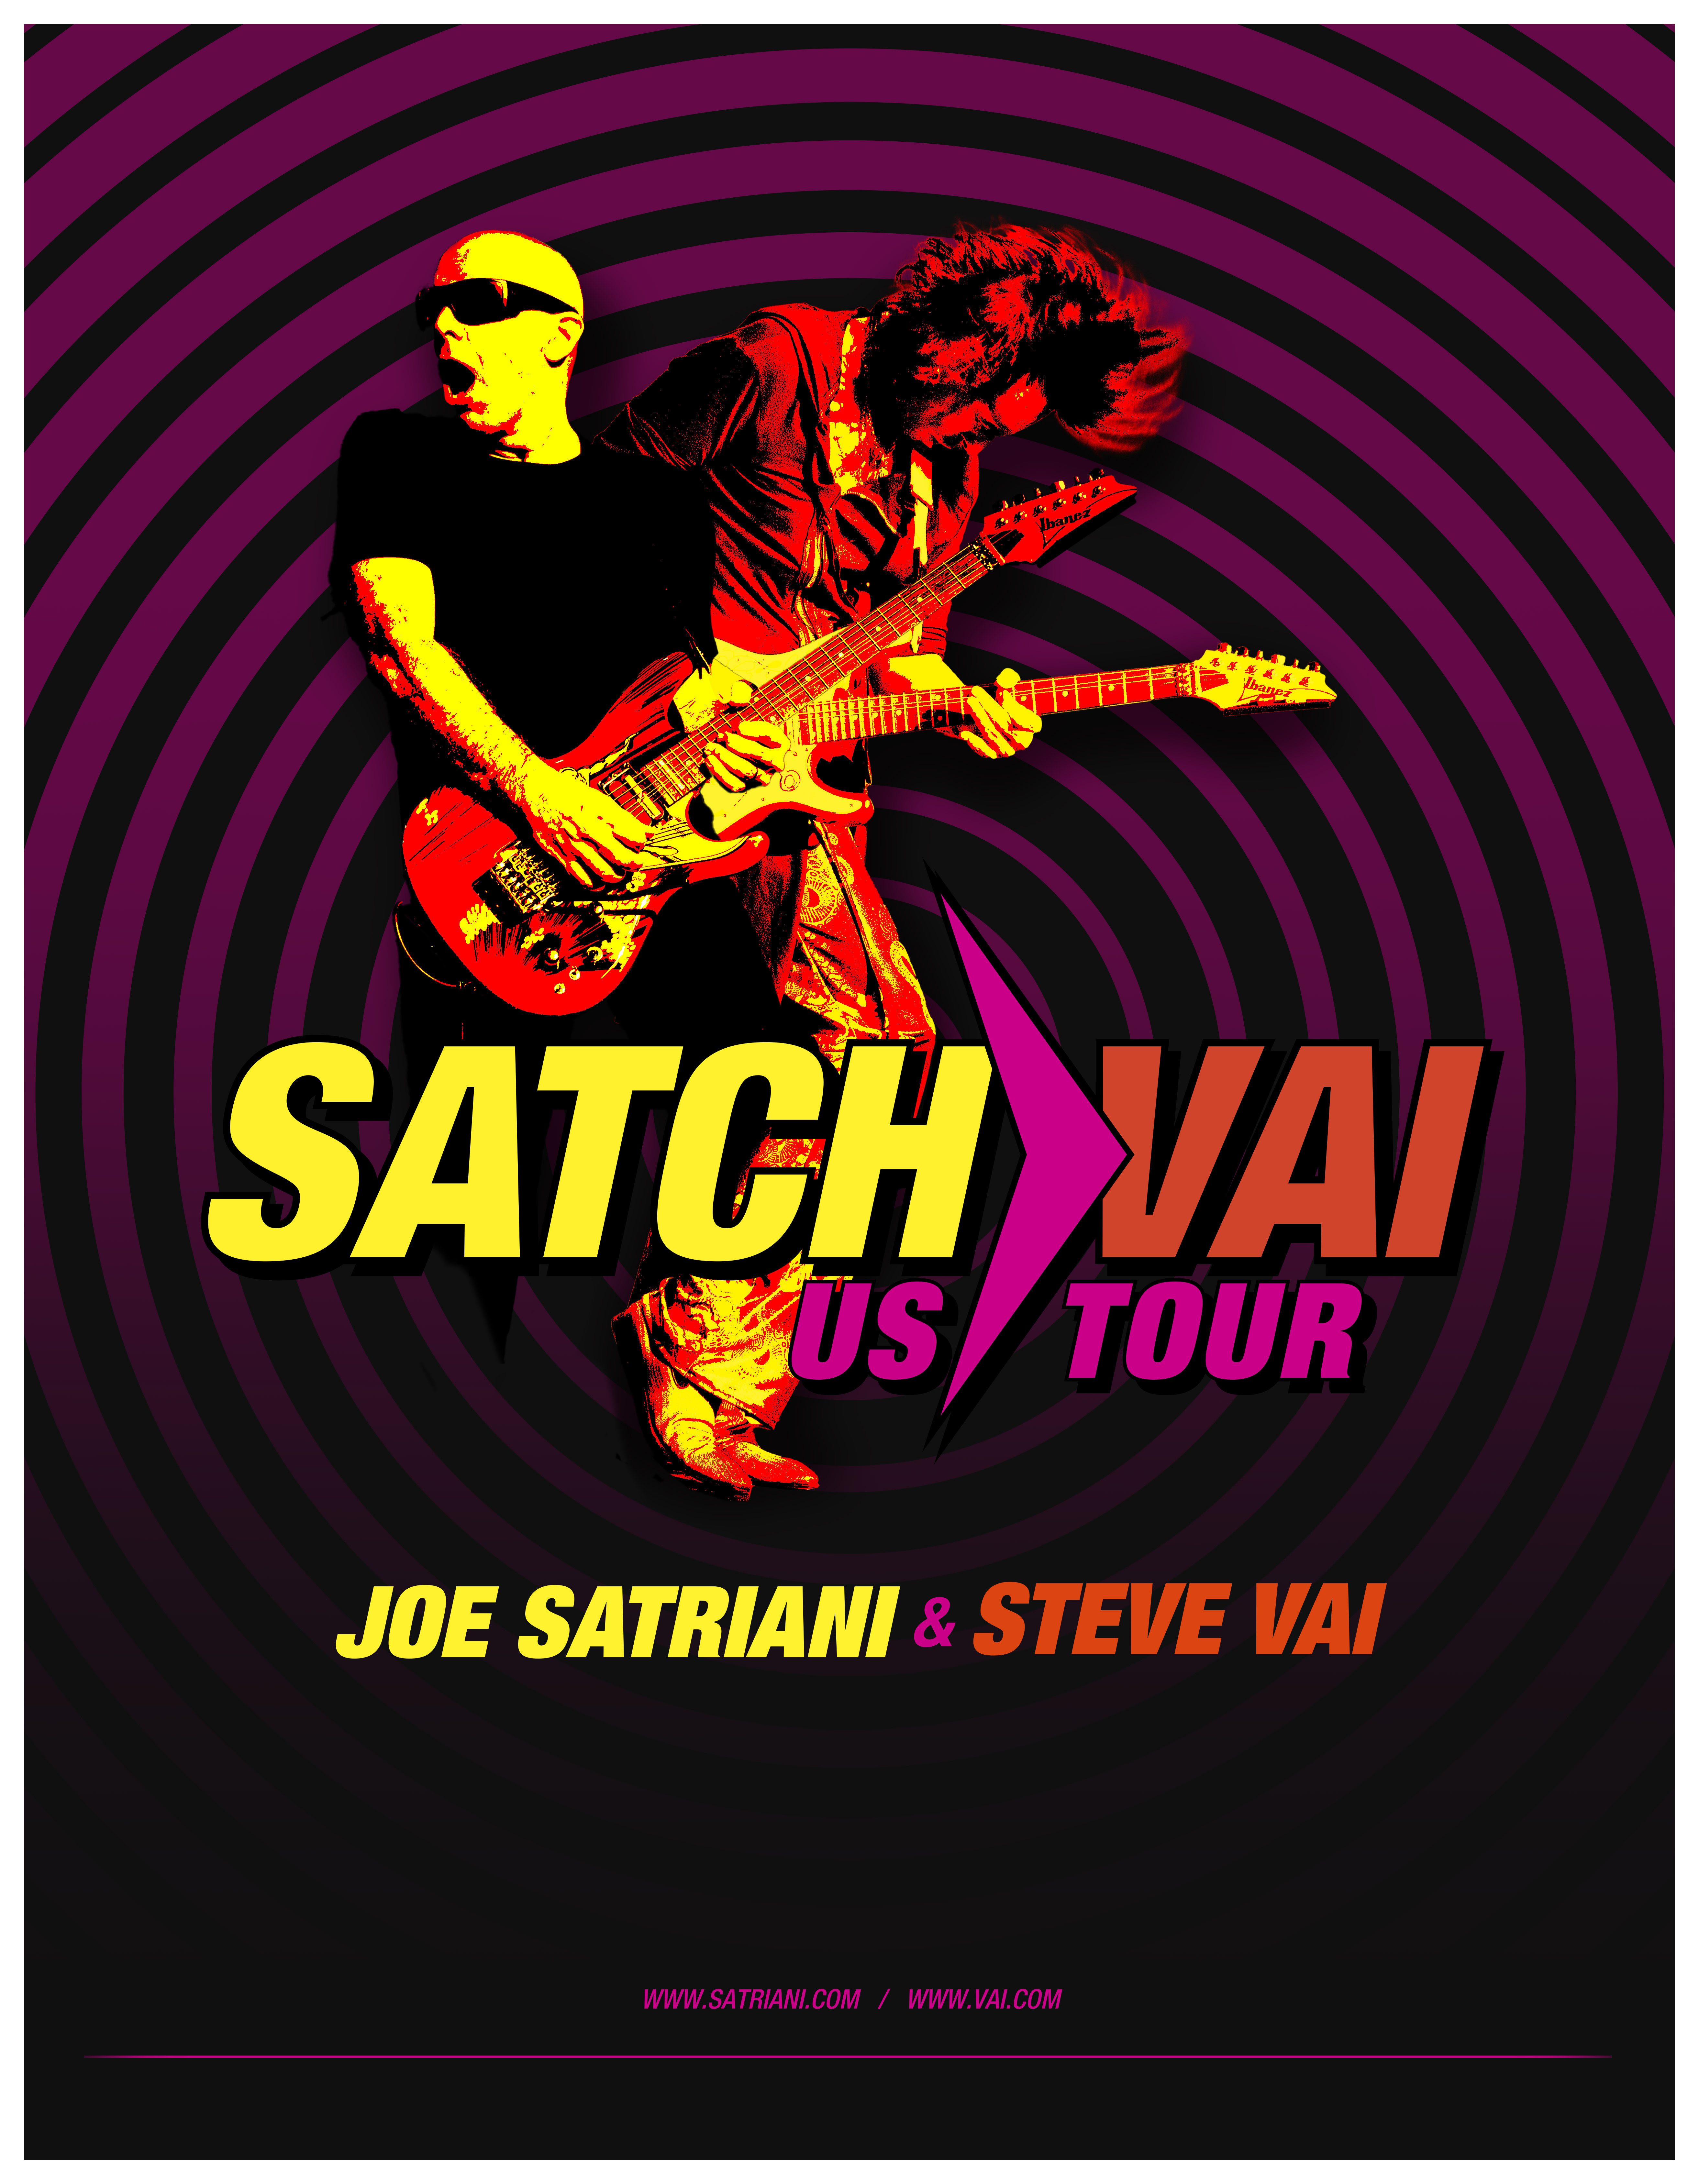 JOE SATRIANI & STEVE VAI Announce Spring U.S. Duo Tour